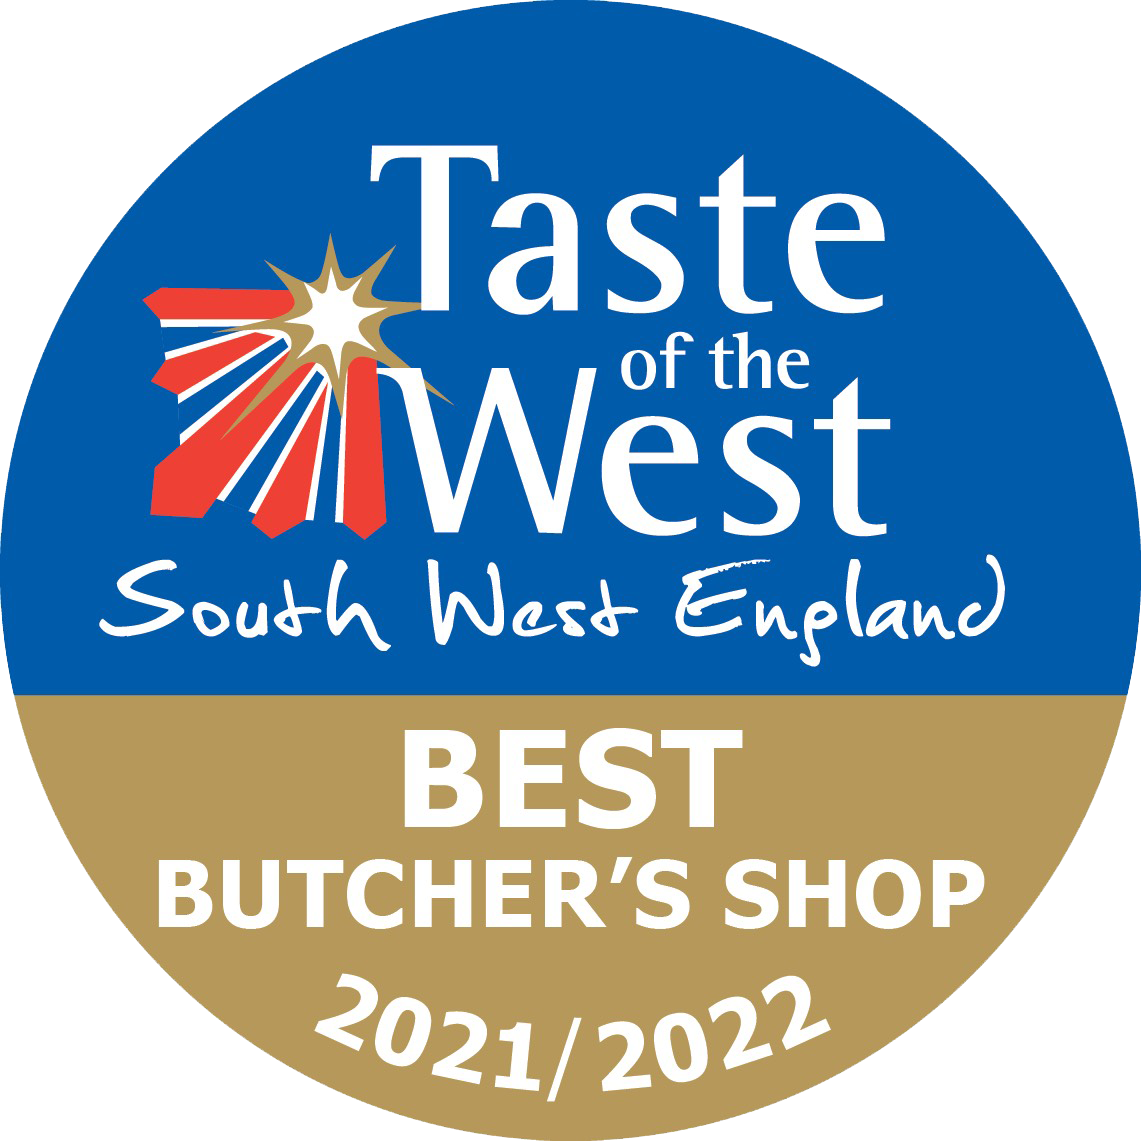 Taste of the West (South West England) BEST Butcher's Shop 2021/2022